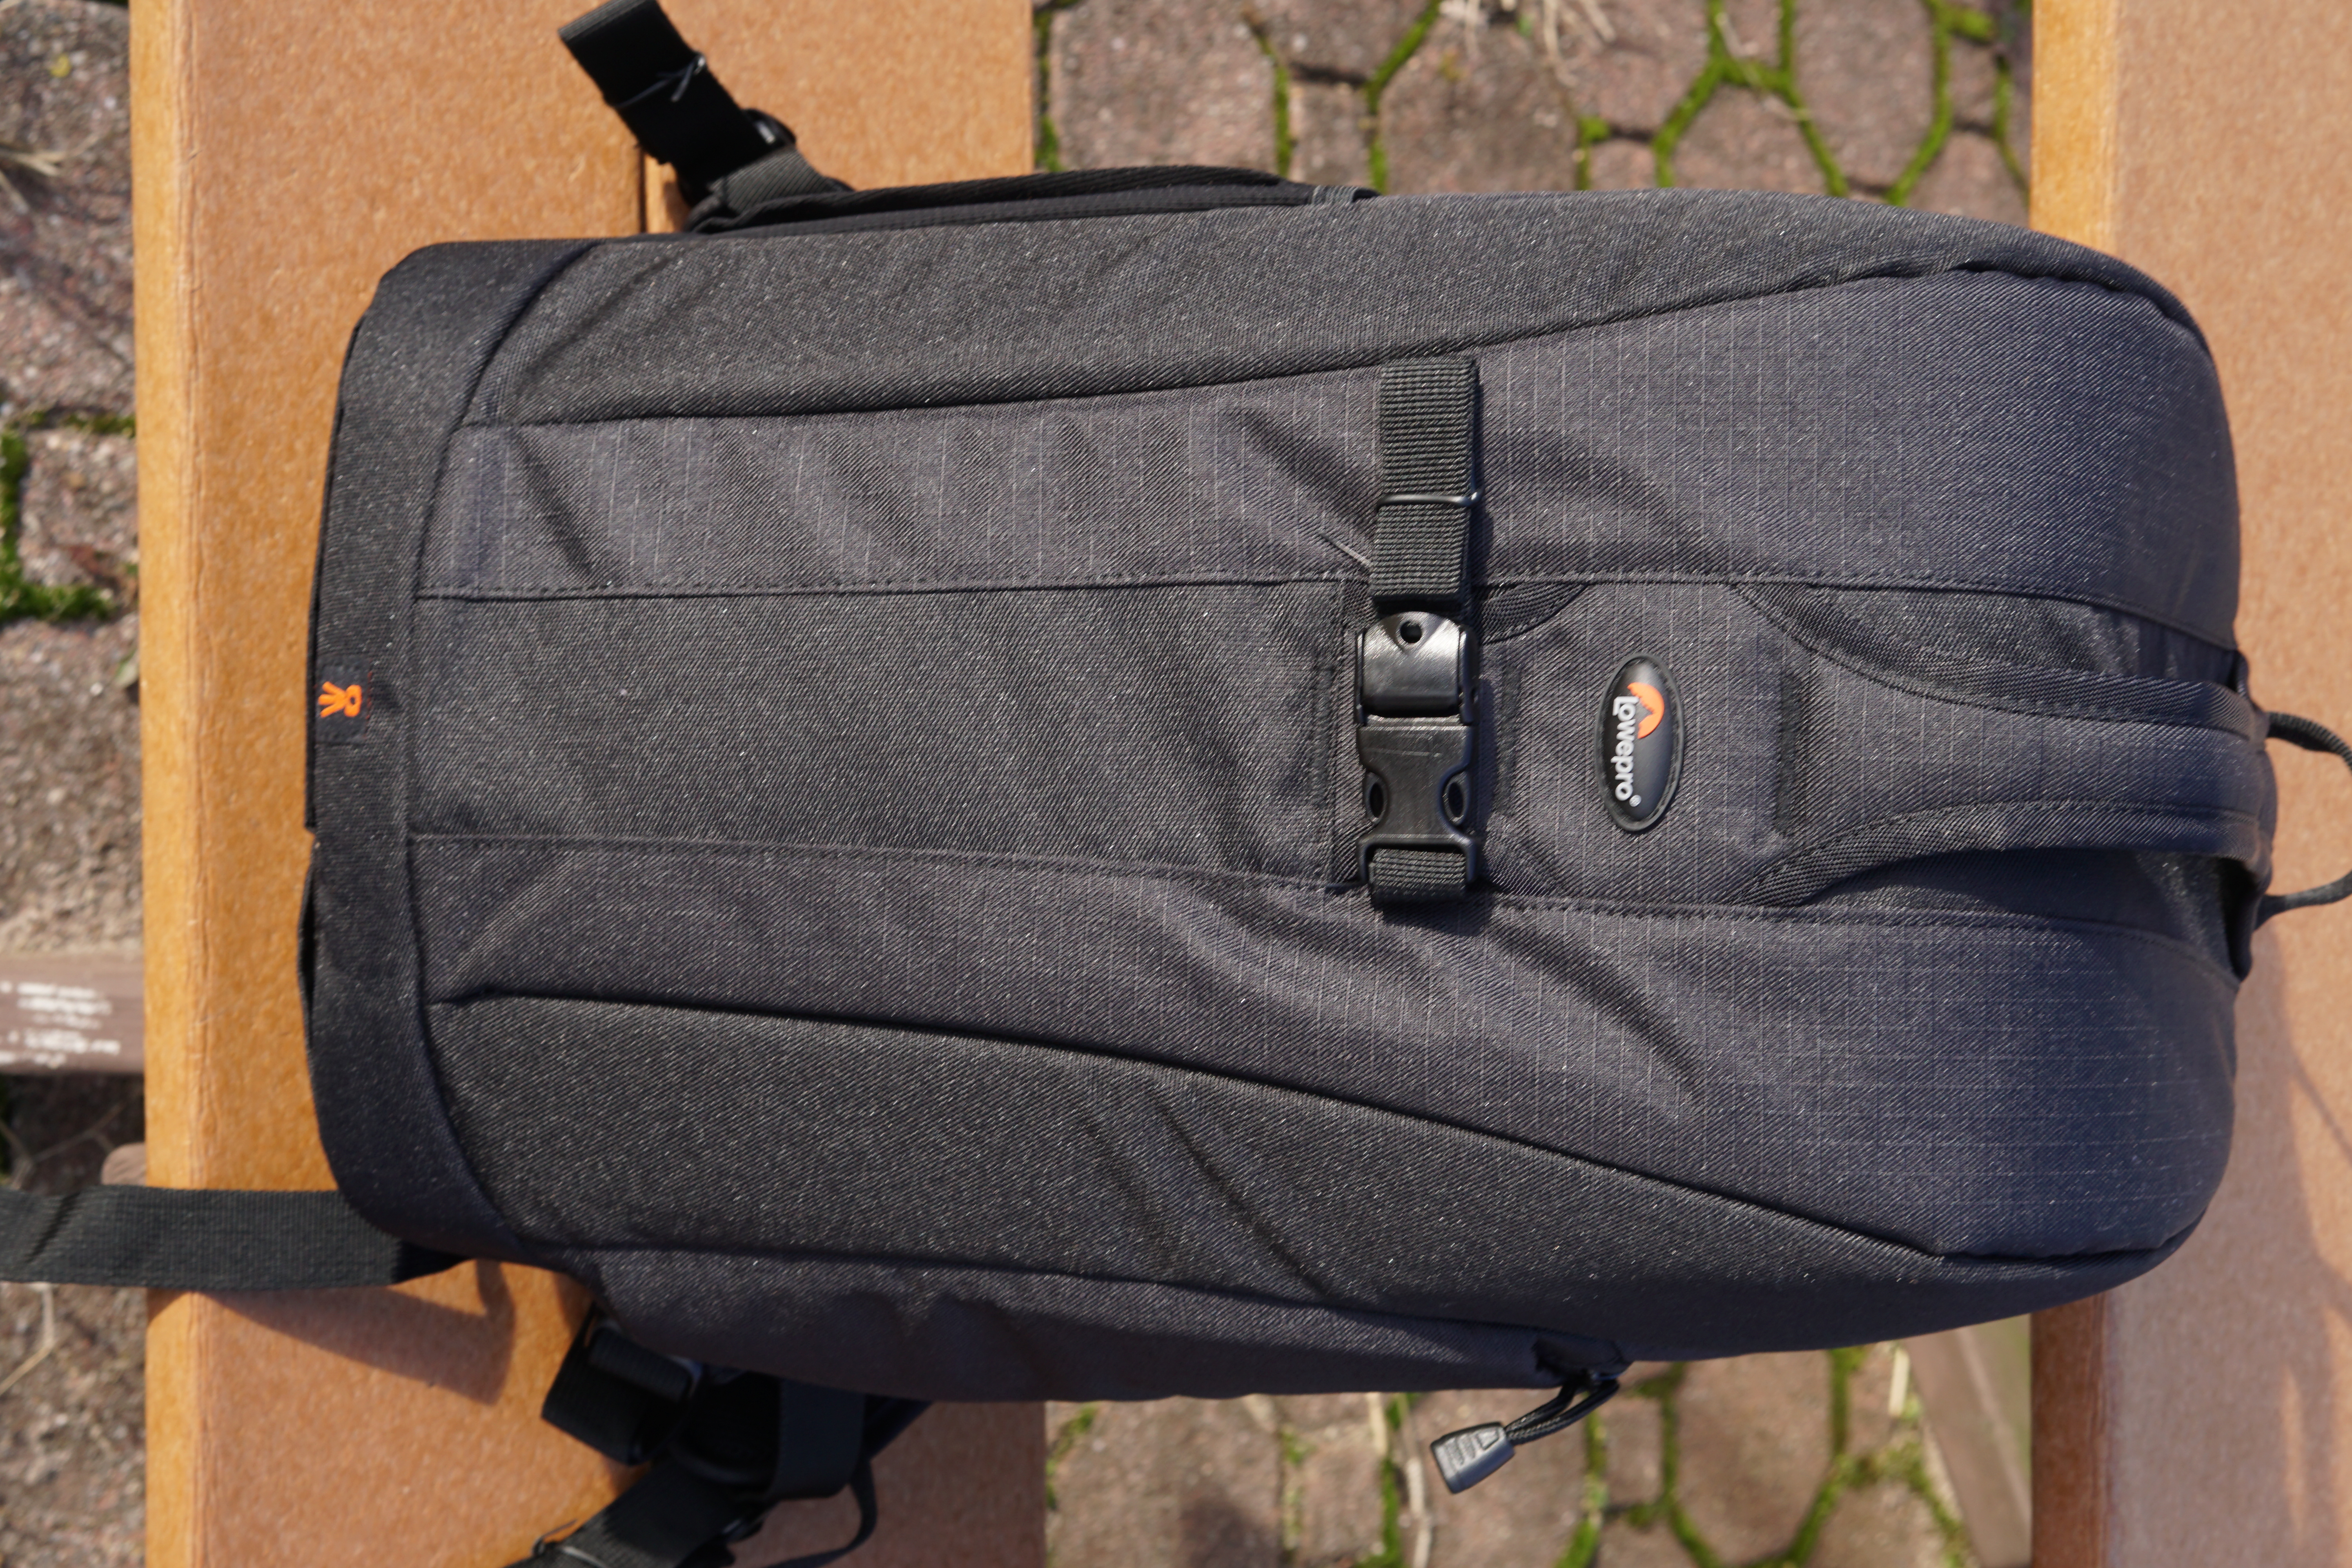 Lowepro Flipside 300 DSLR Camera Backpack with my P1000: Nikon 